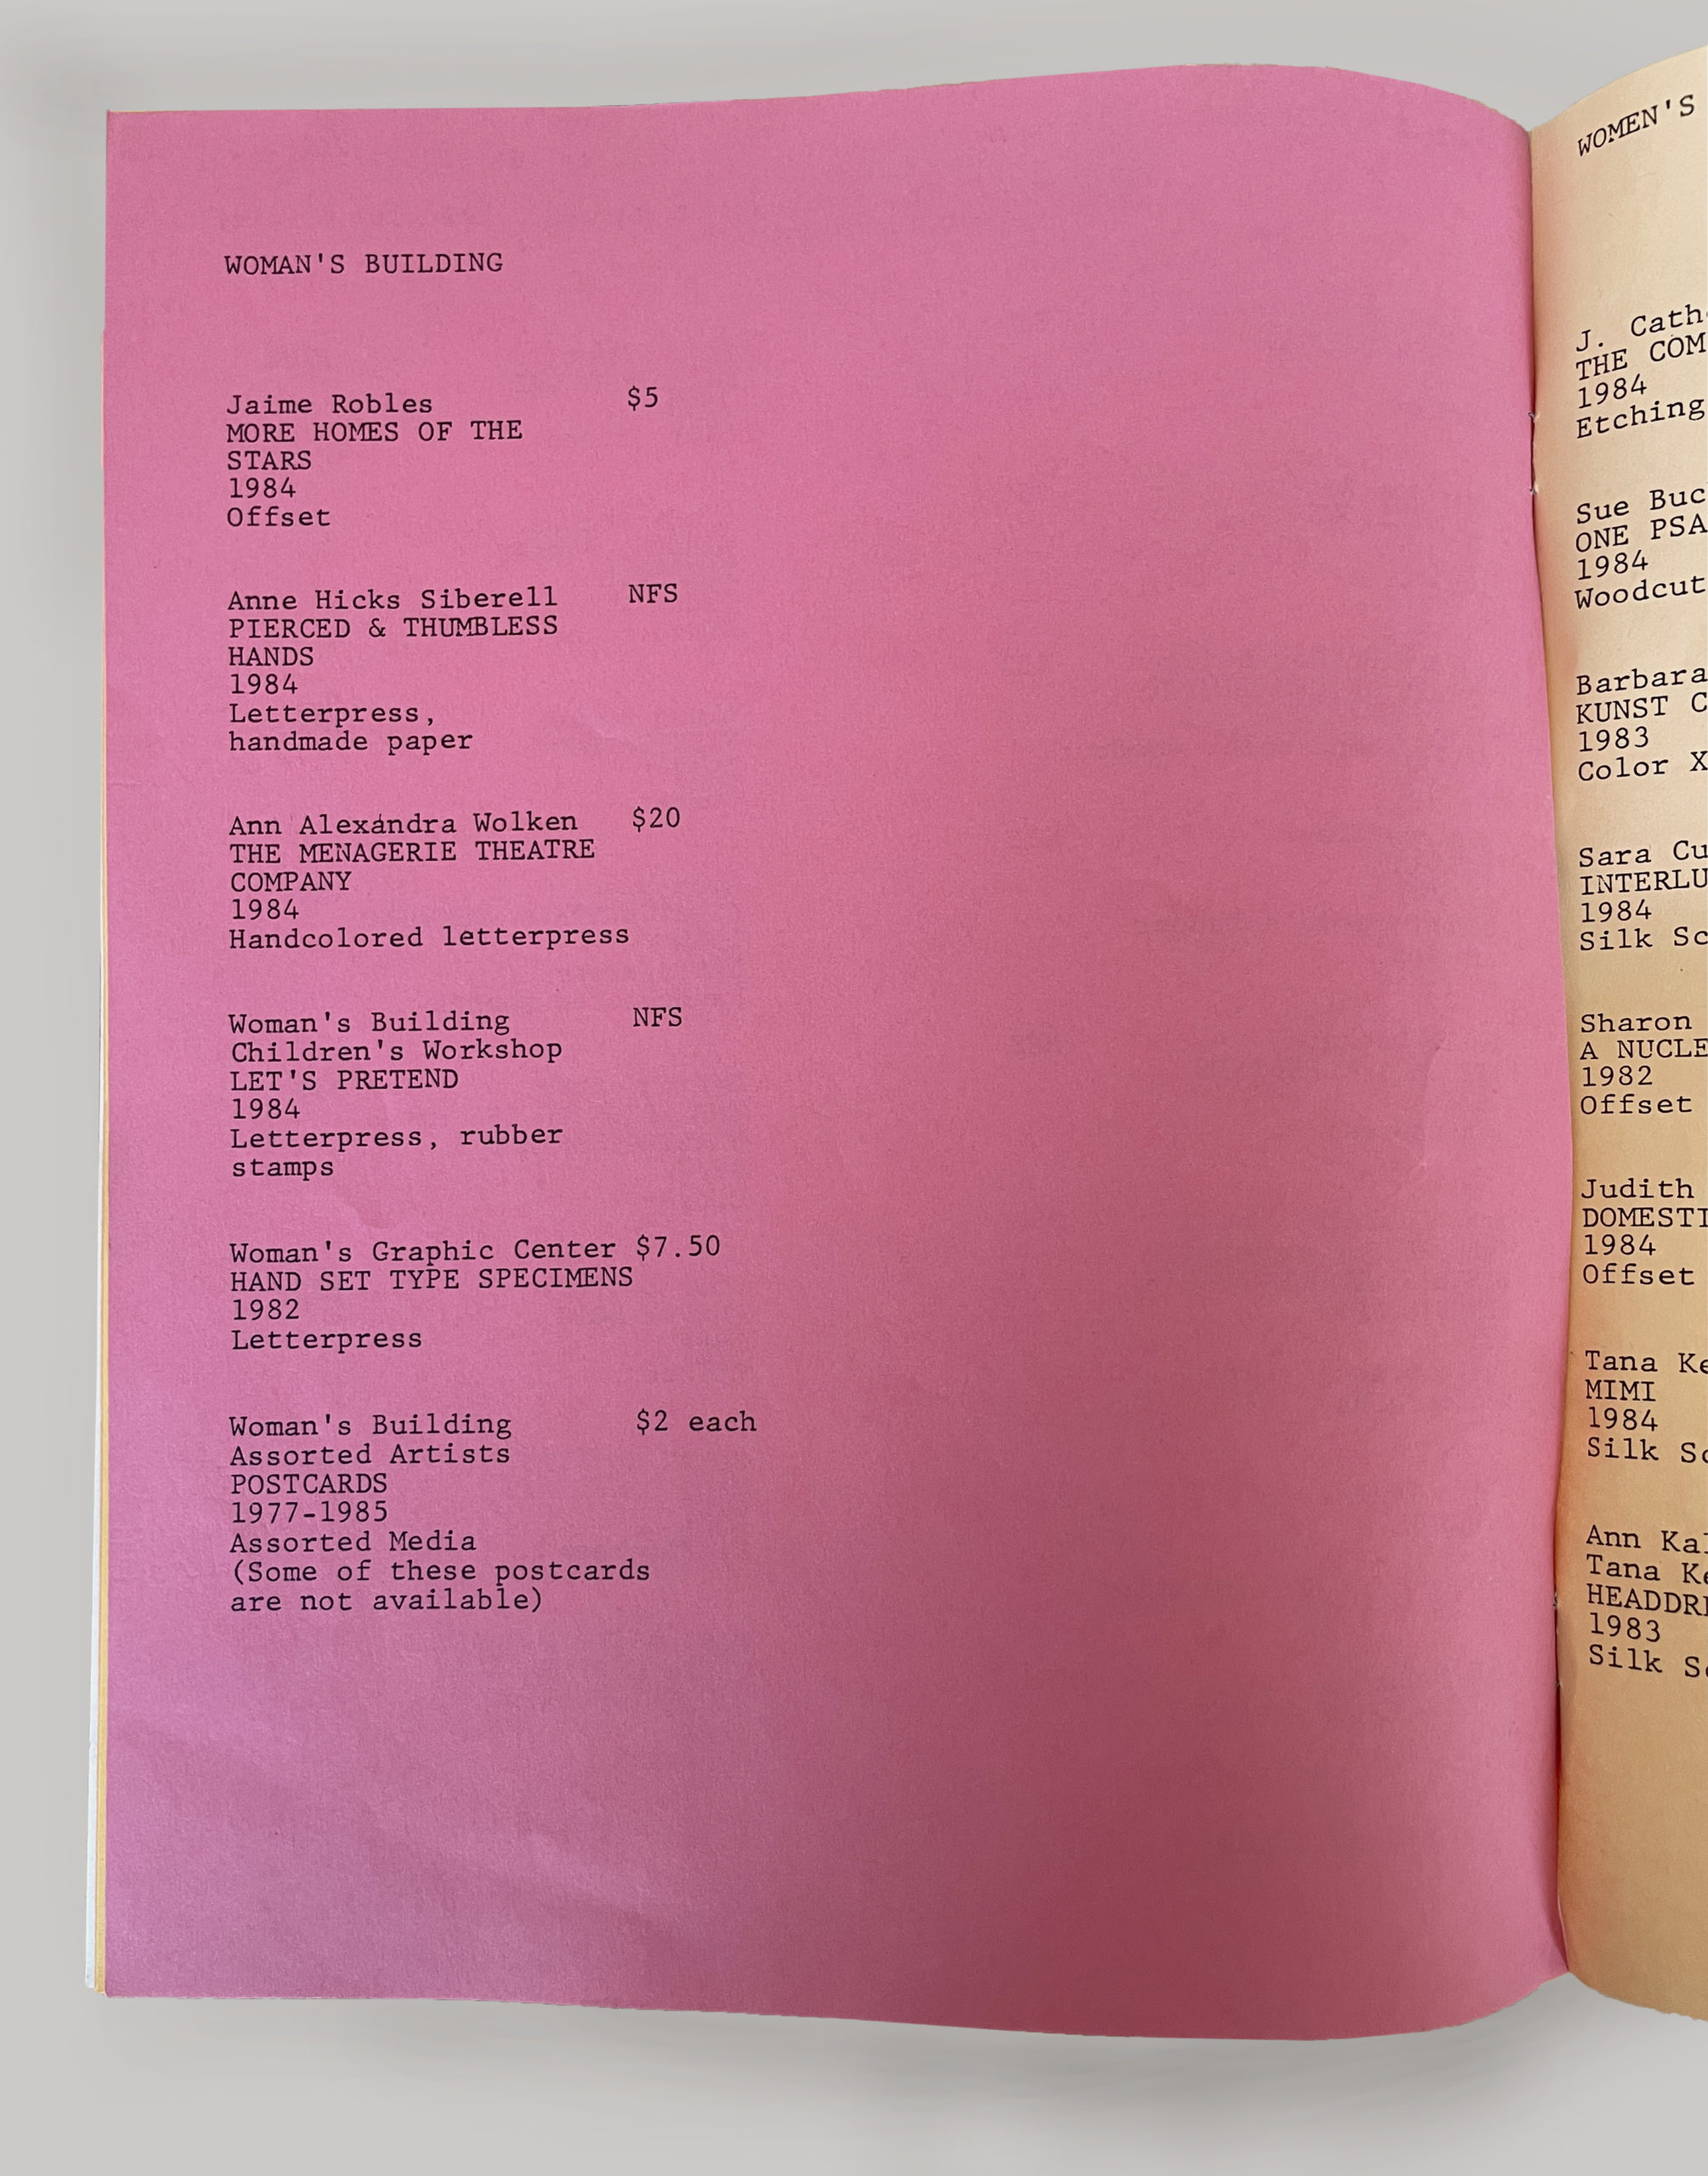 bright pink paper with typewriten checklist of artworks in one column